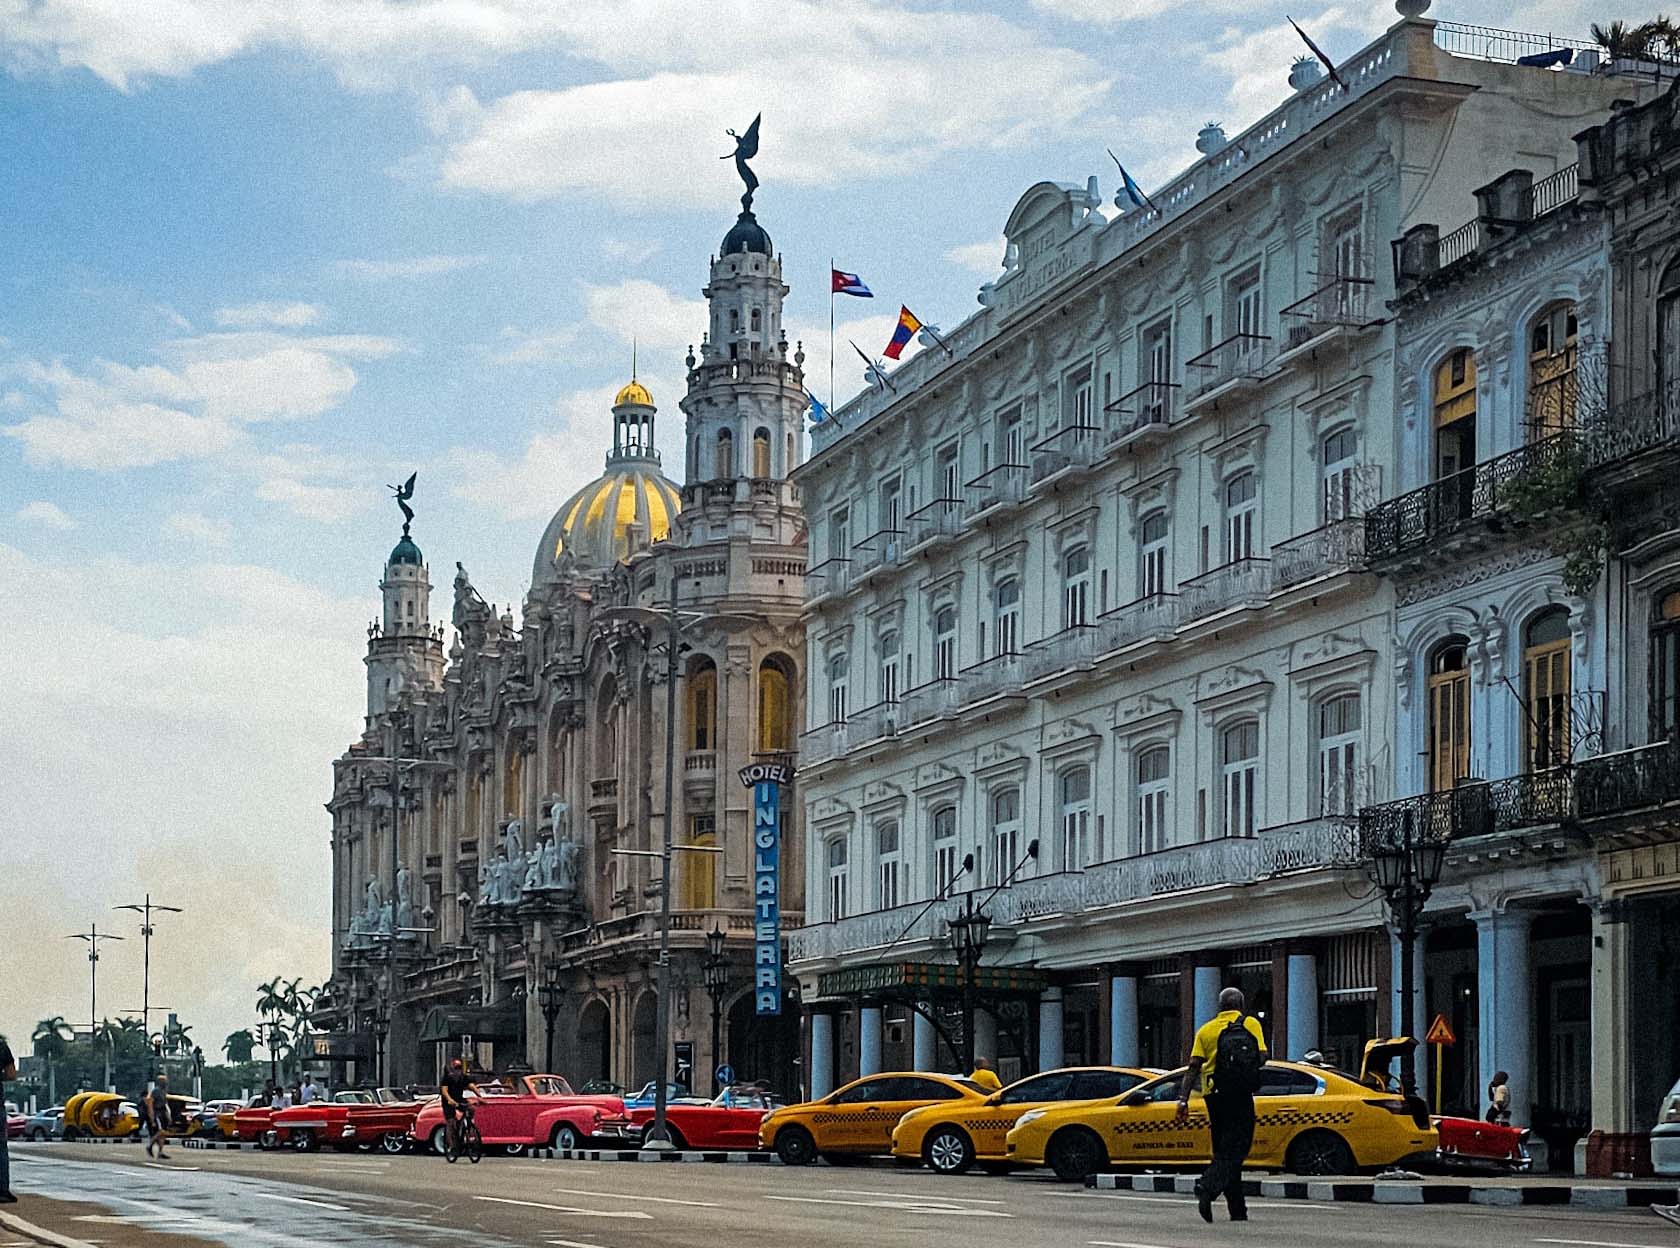 Hotel Inglés in Havana